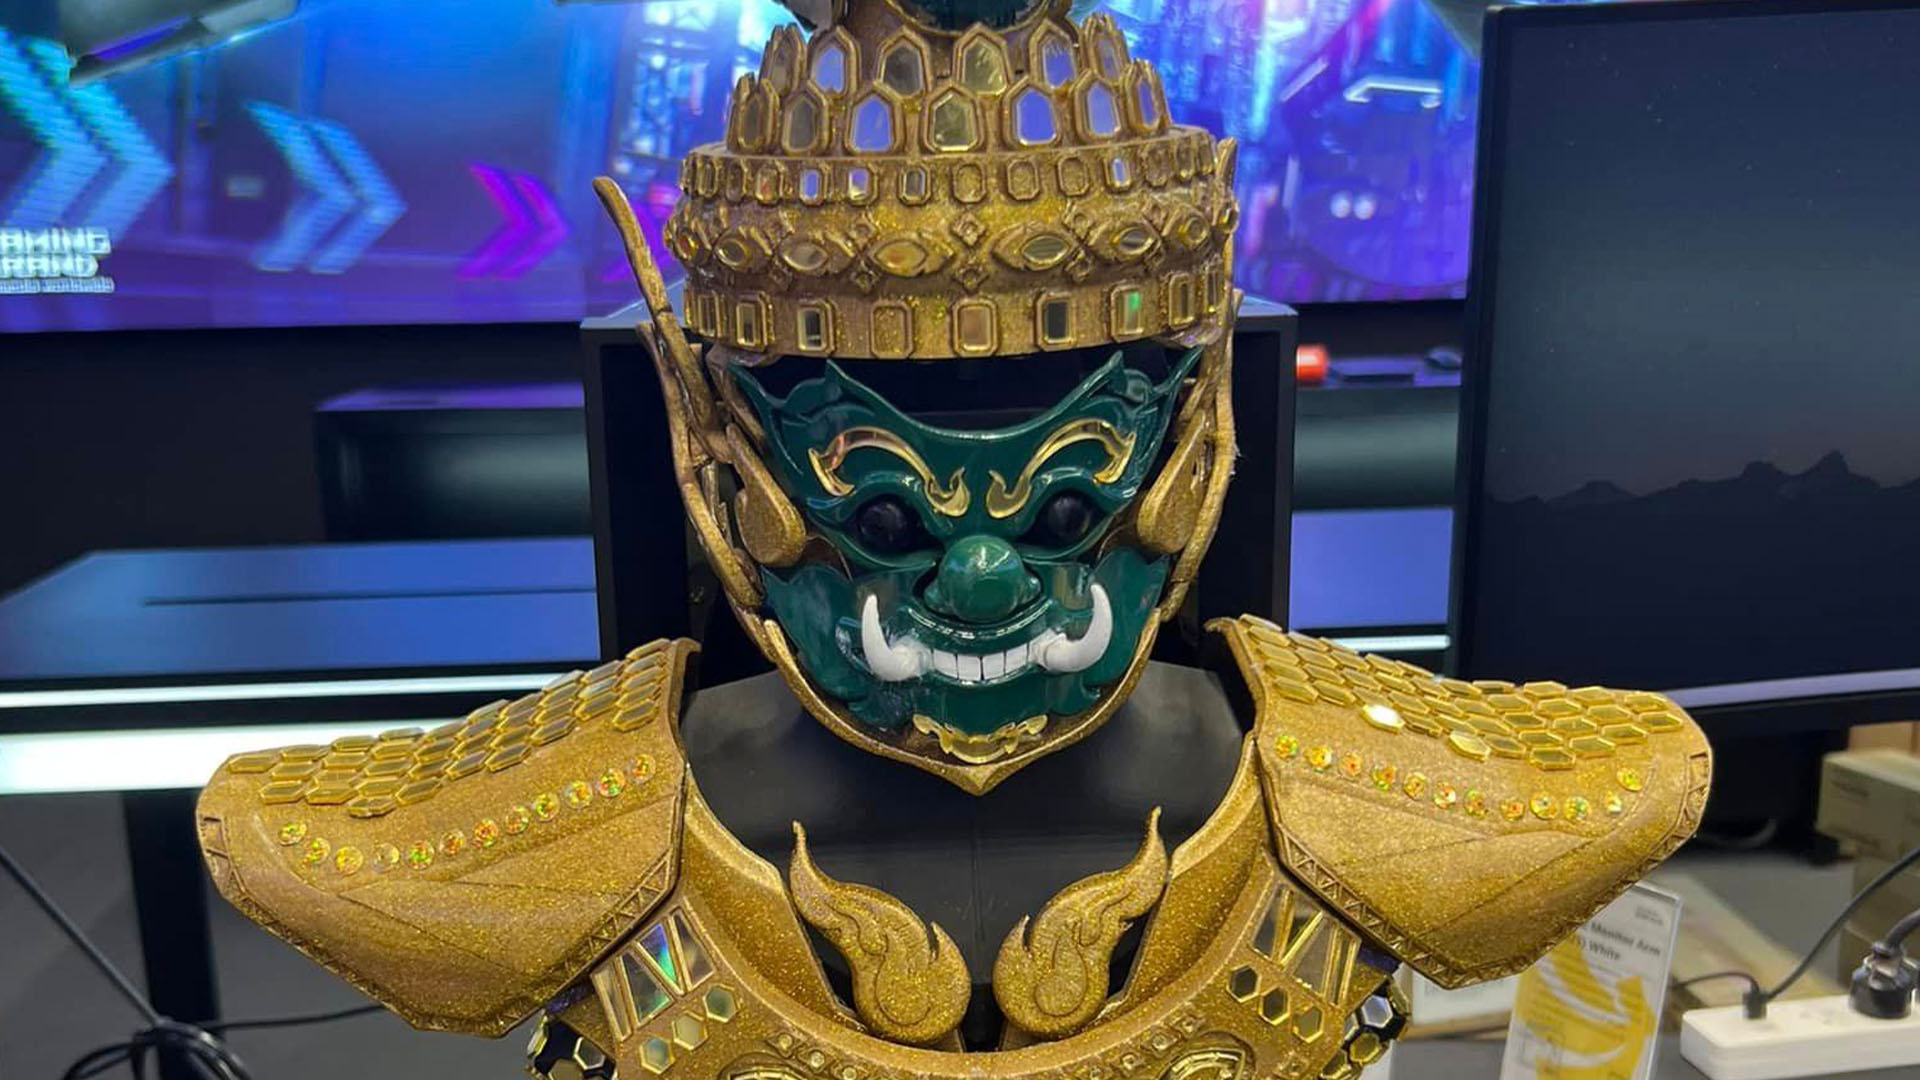 This incredible AMD gaming PC celebrates a green Thai demon king